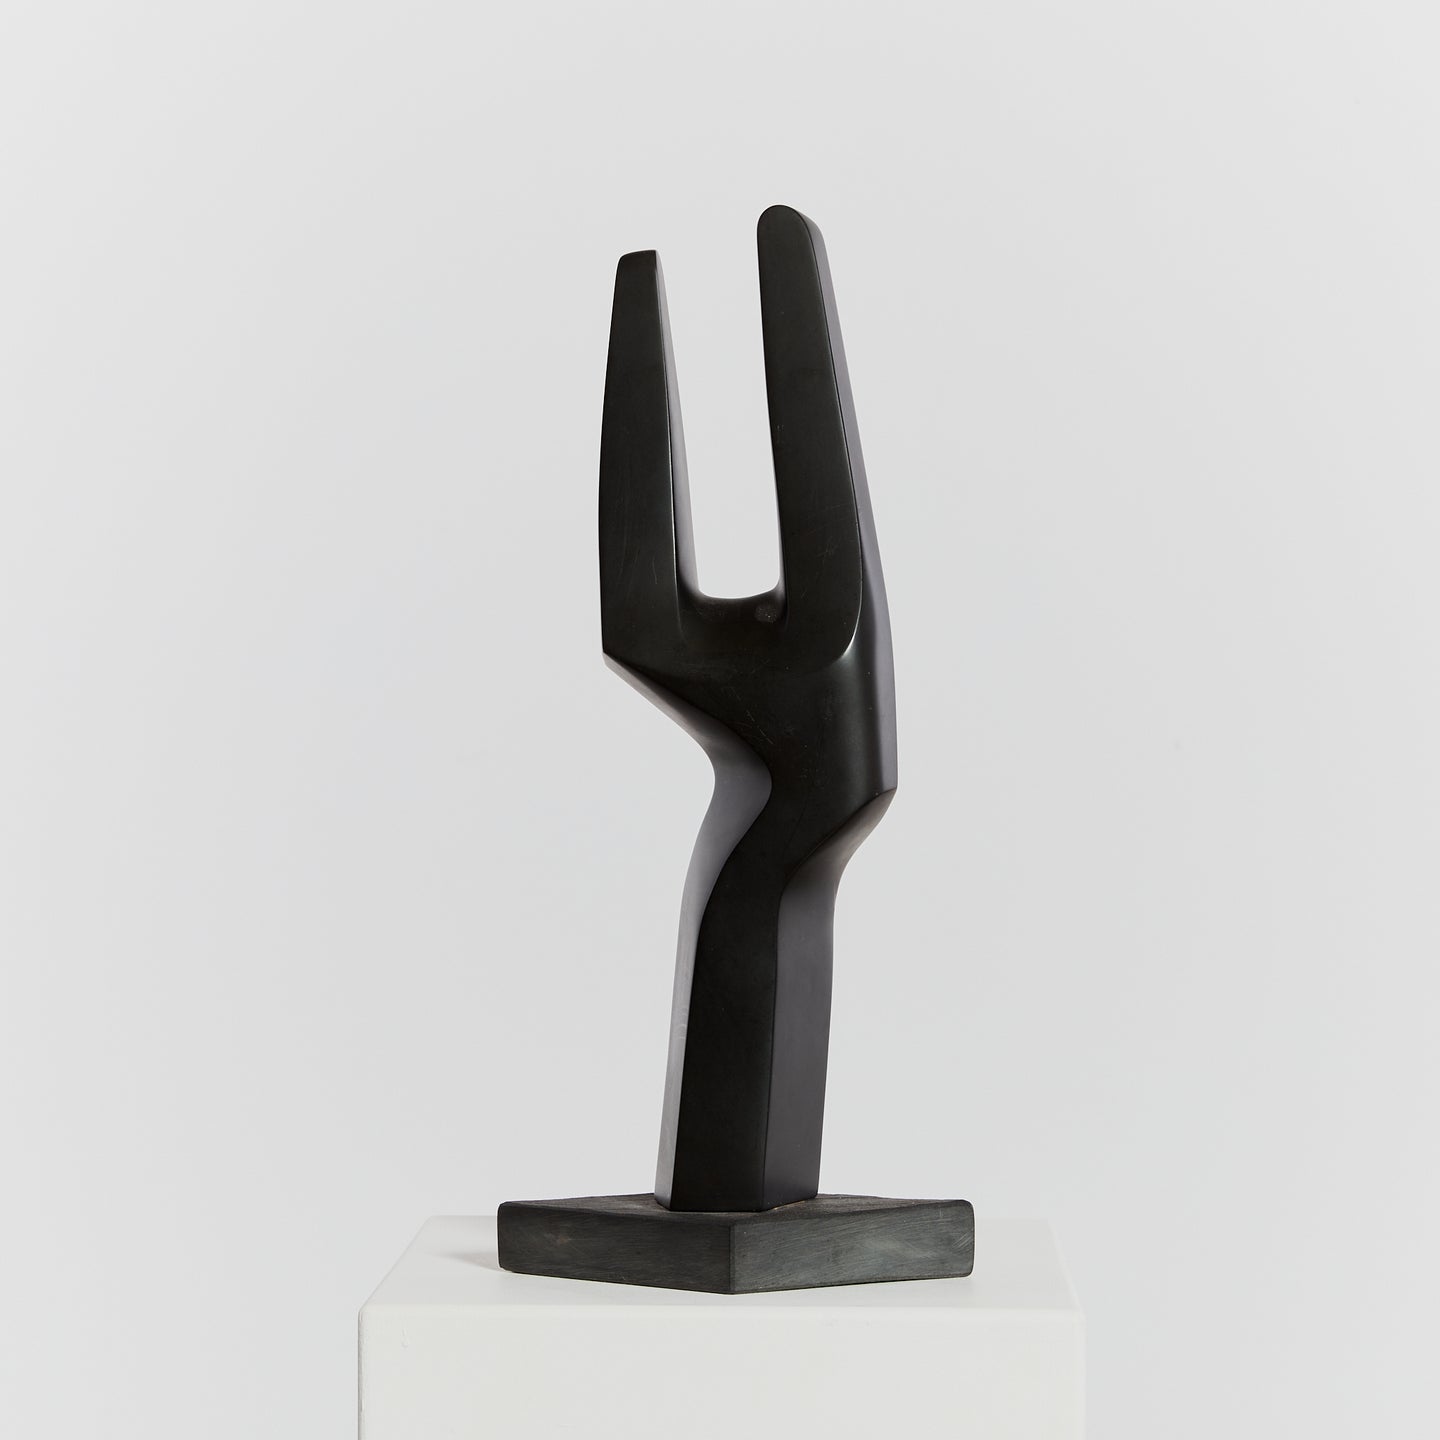 Modernist slate forked sculpture, signed and numbered